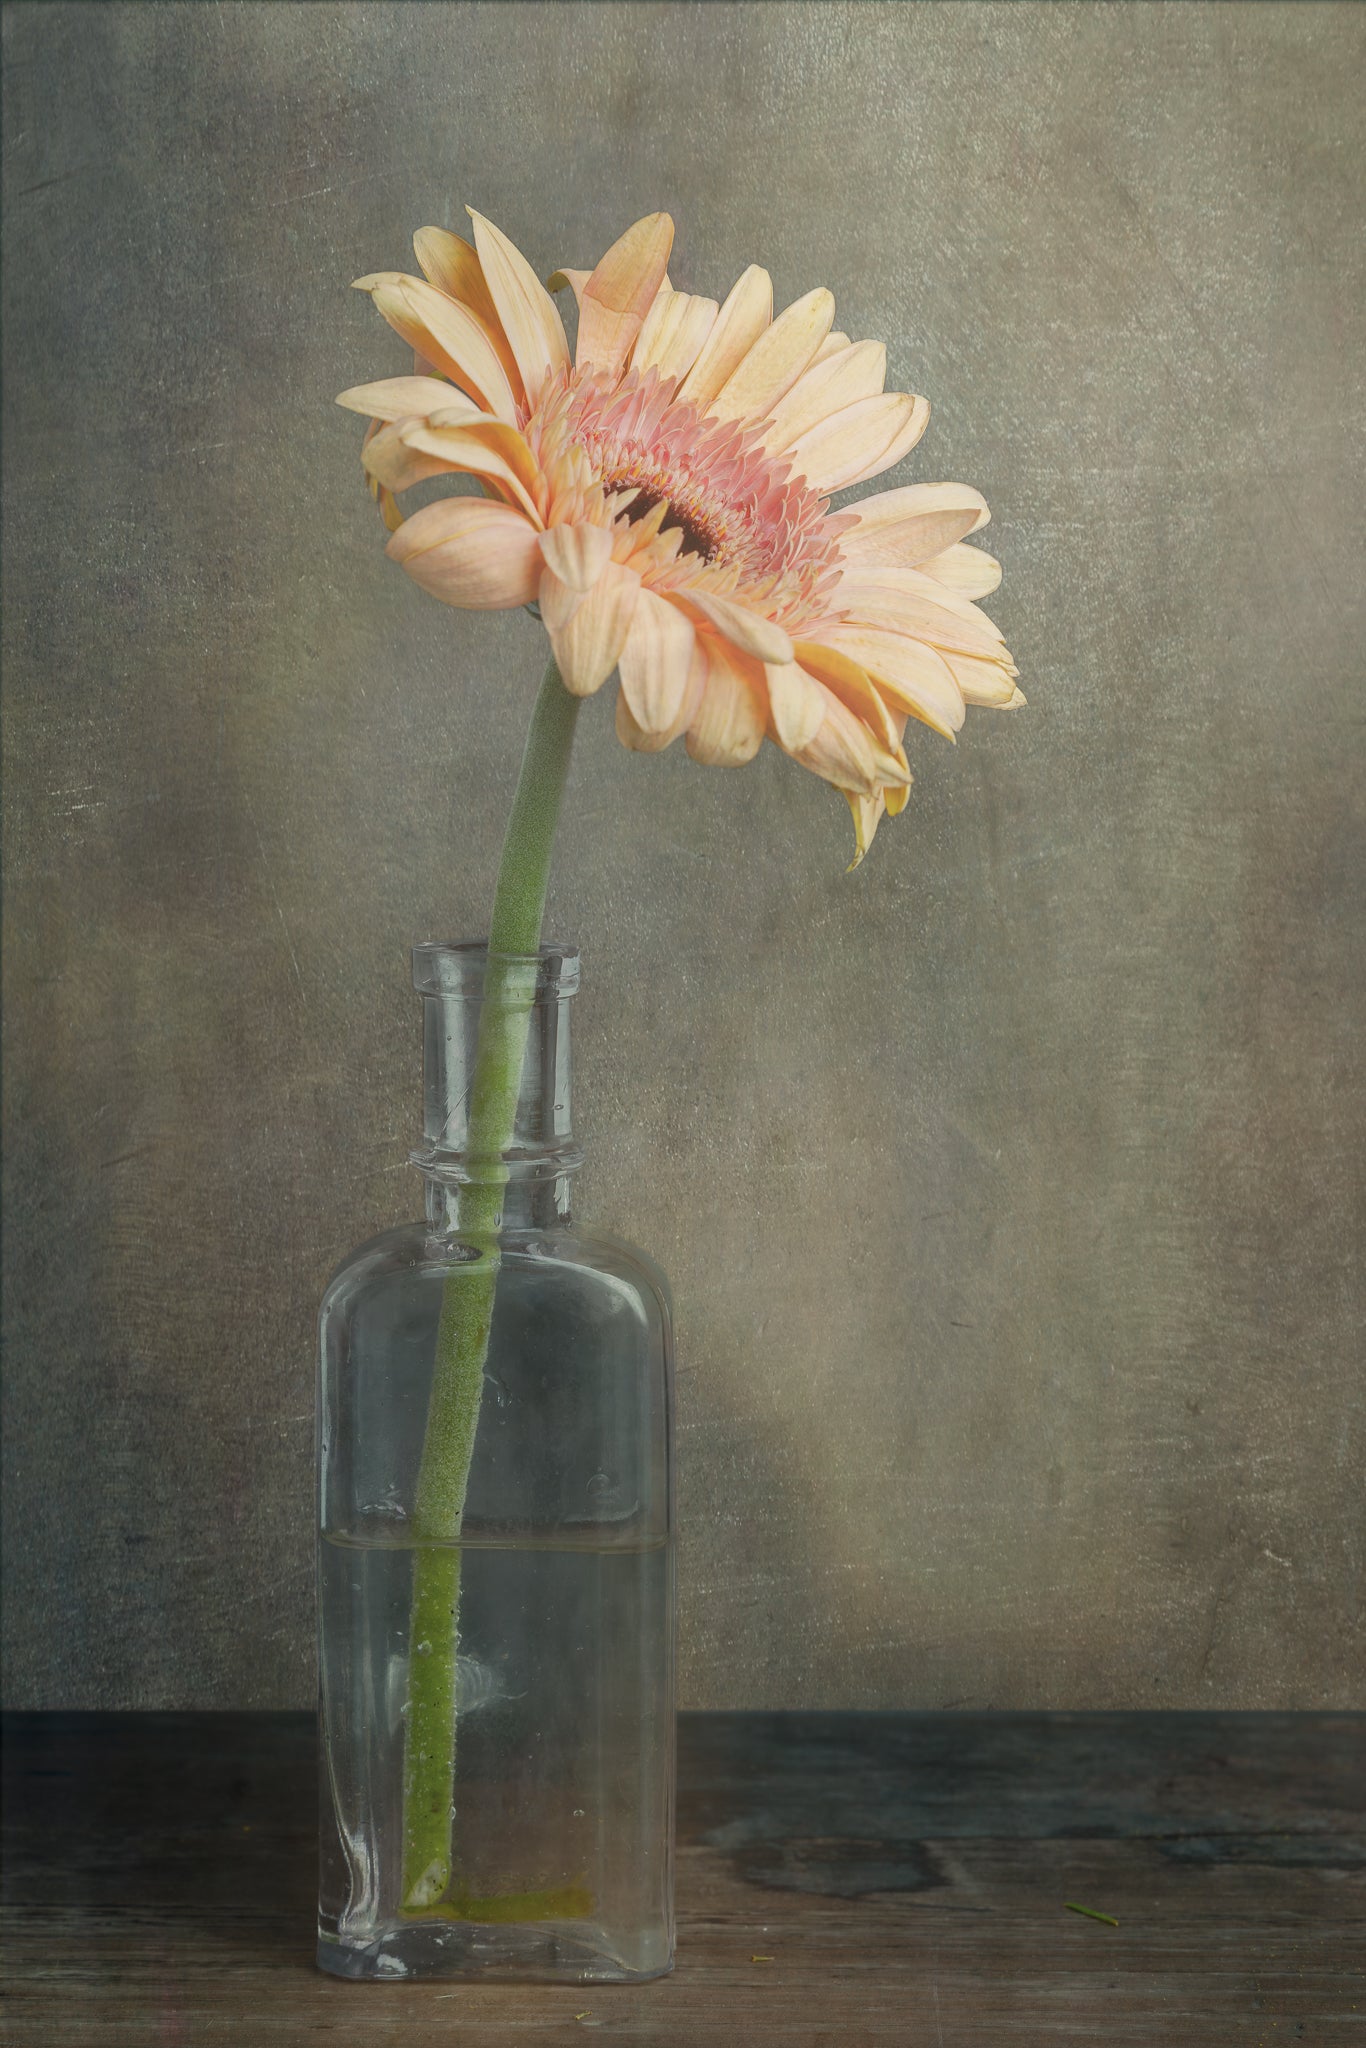 Fine art flower photograph of a Gerber daisy in an old bottle titled "Summer Day" by Cameron Dreaux of Dreaux Fine Art.